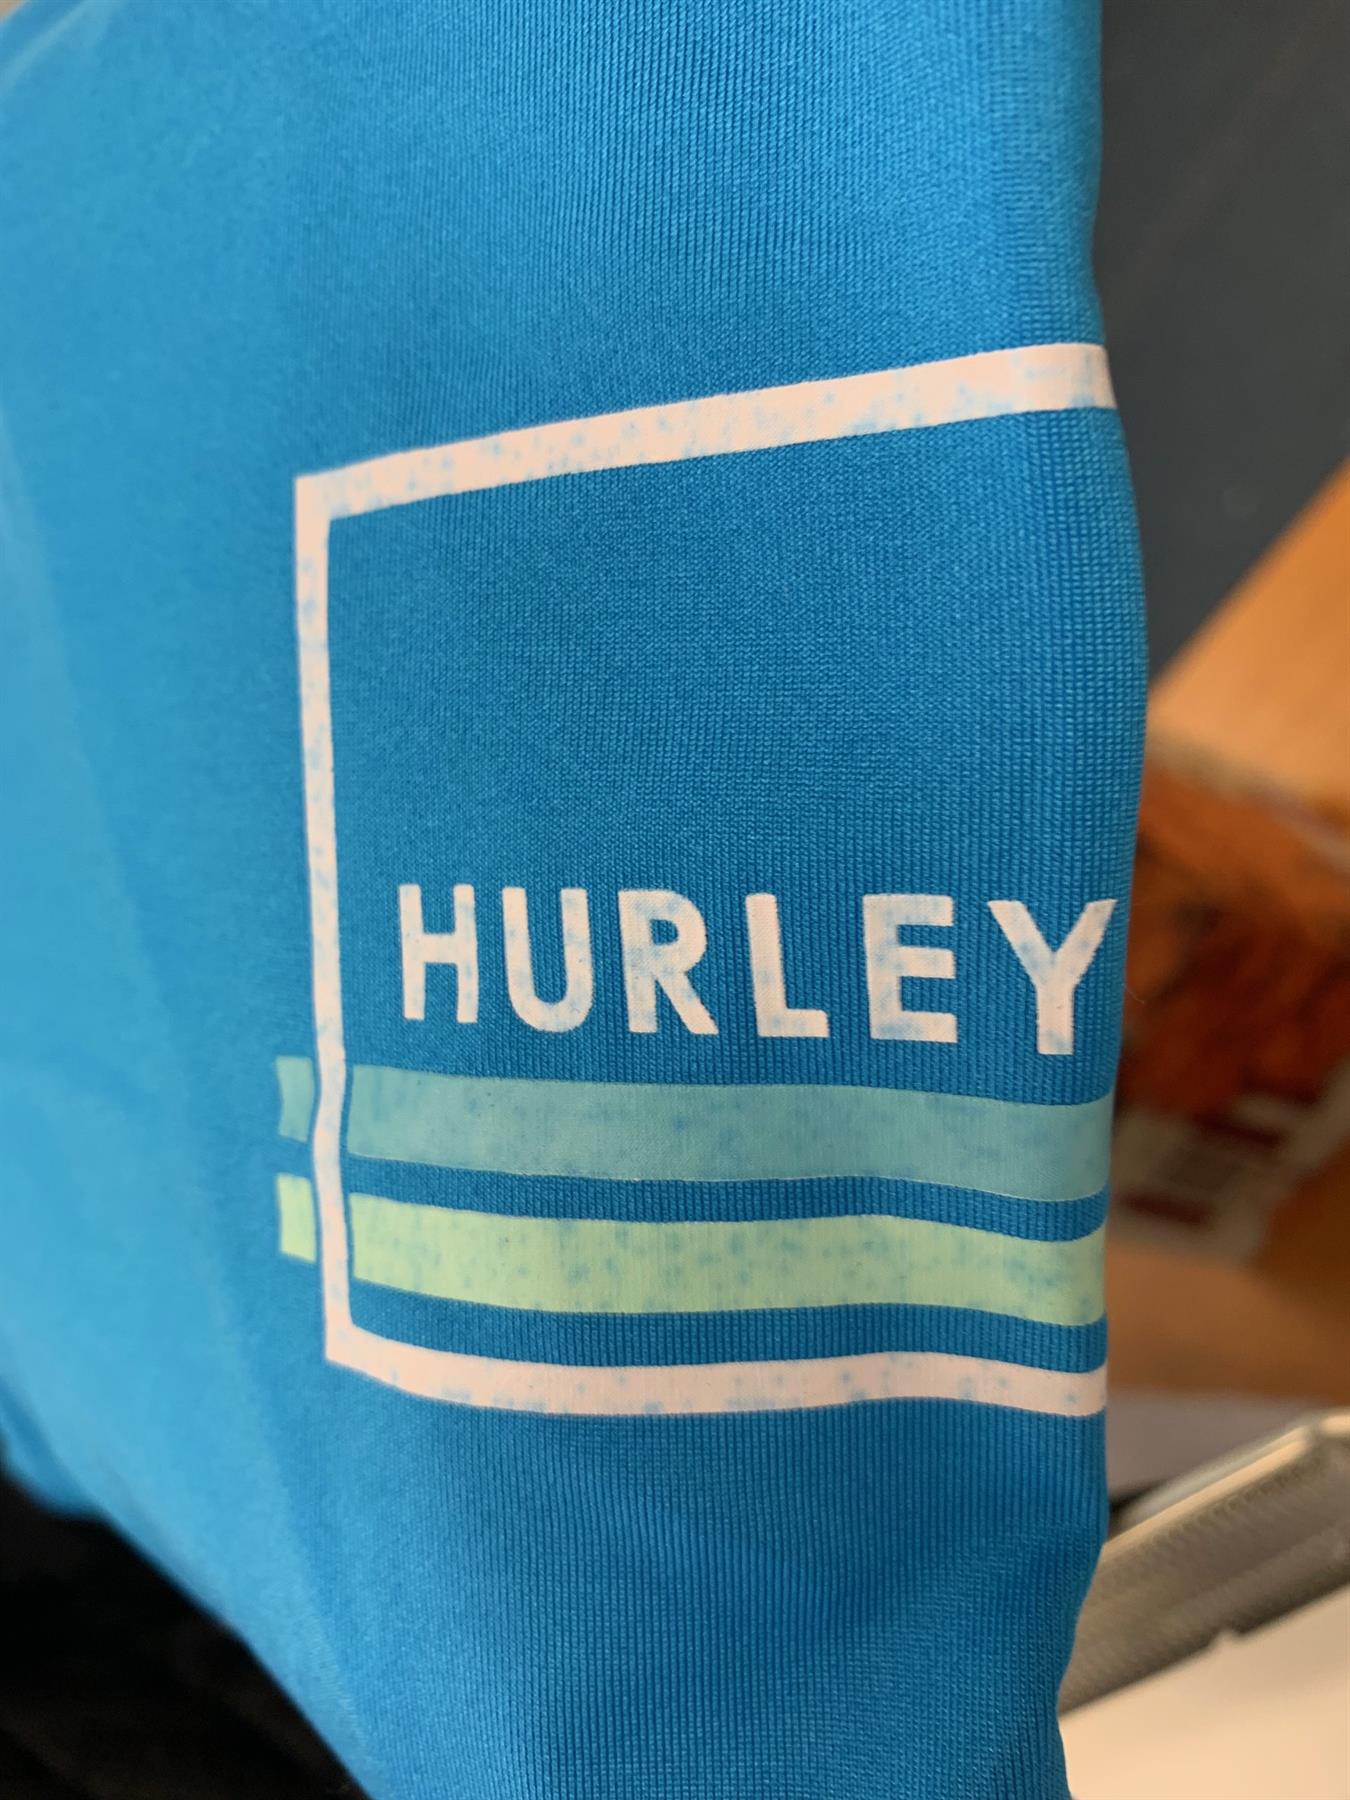 Hurley Men's Long Sleeve Moisture Wicking Graphic Rash Guard Shirt